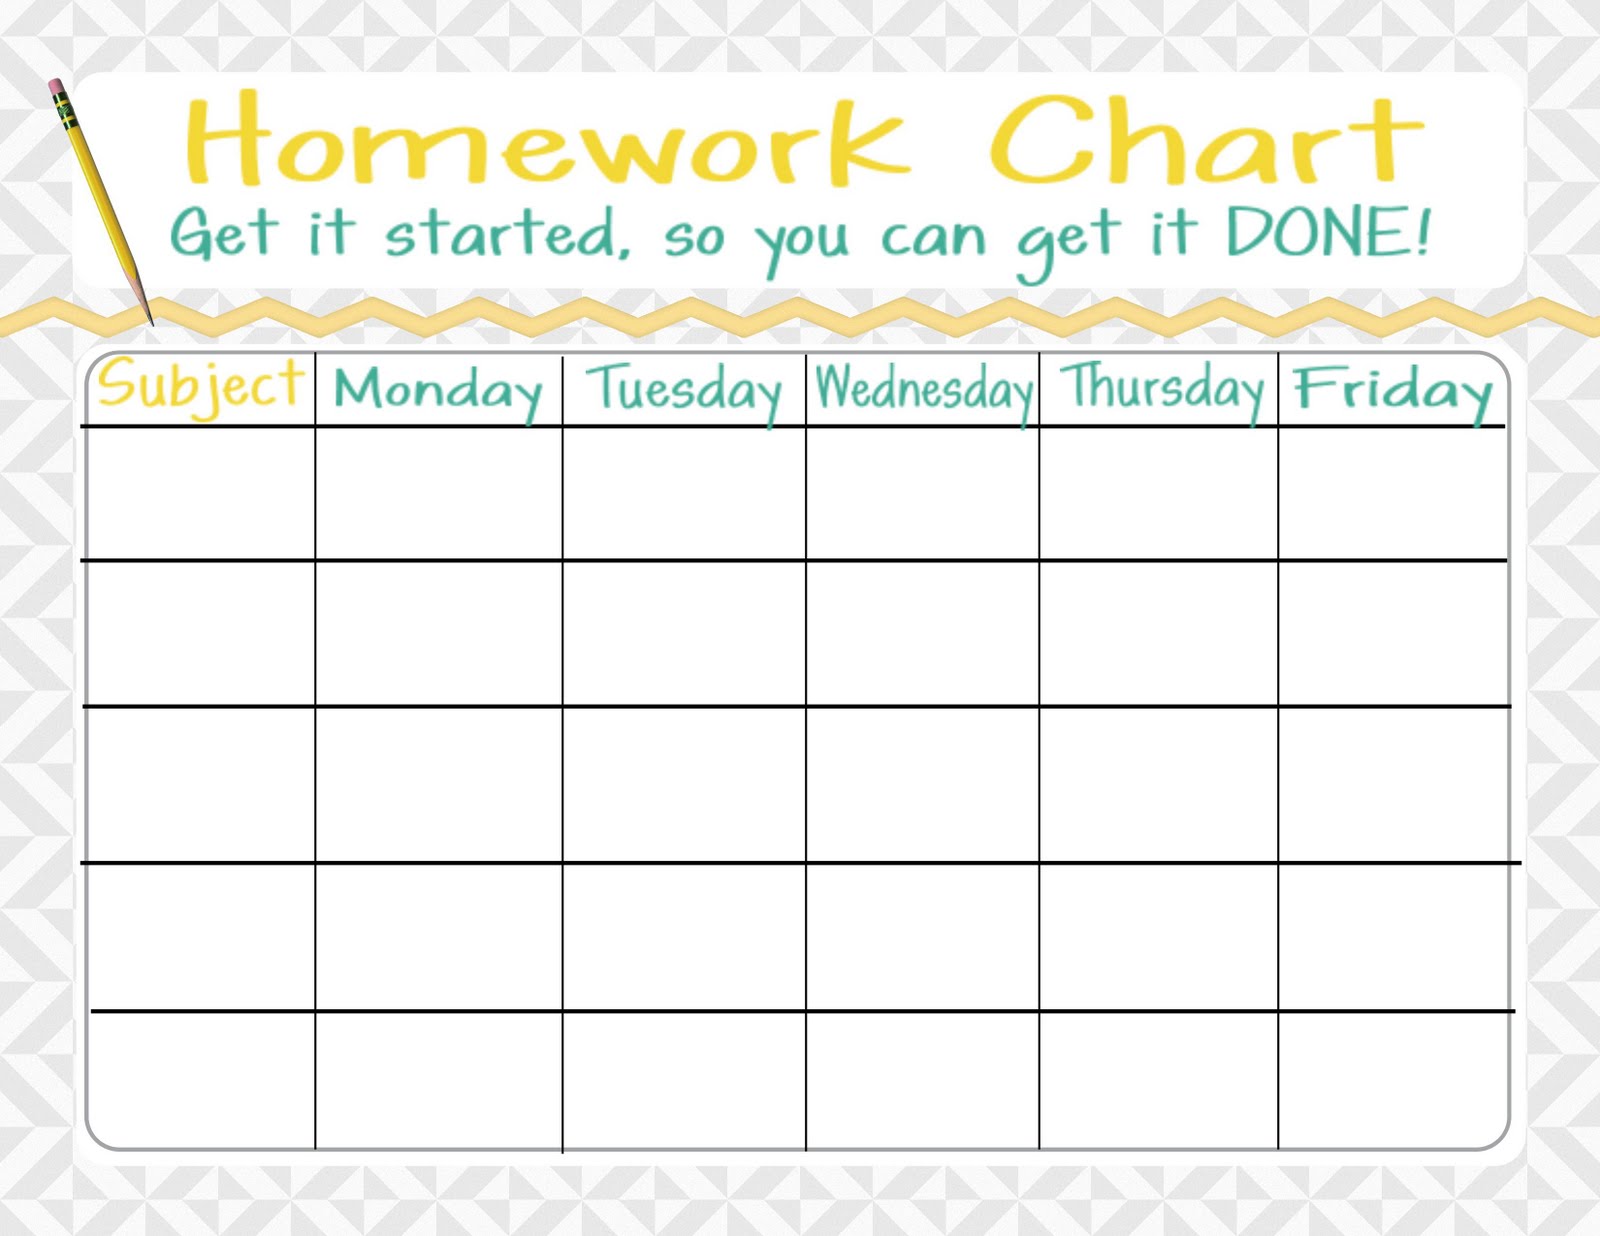 Printable Weekly Homework Charts